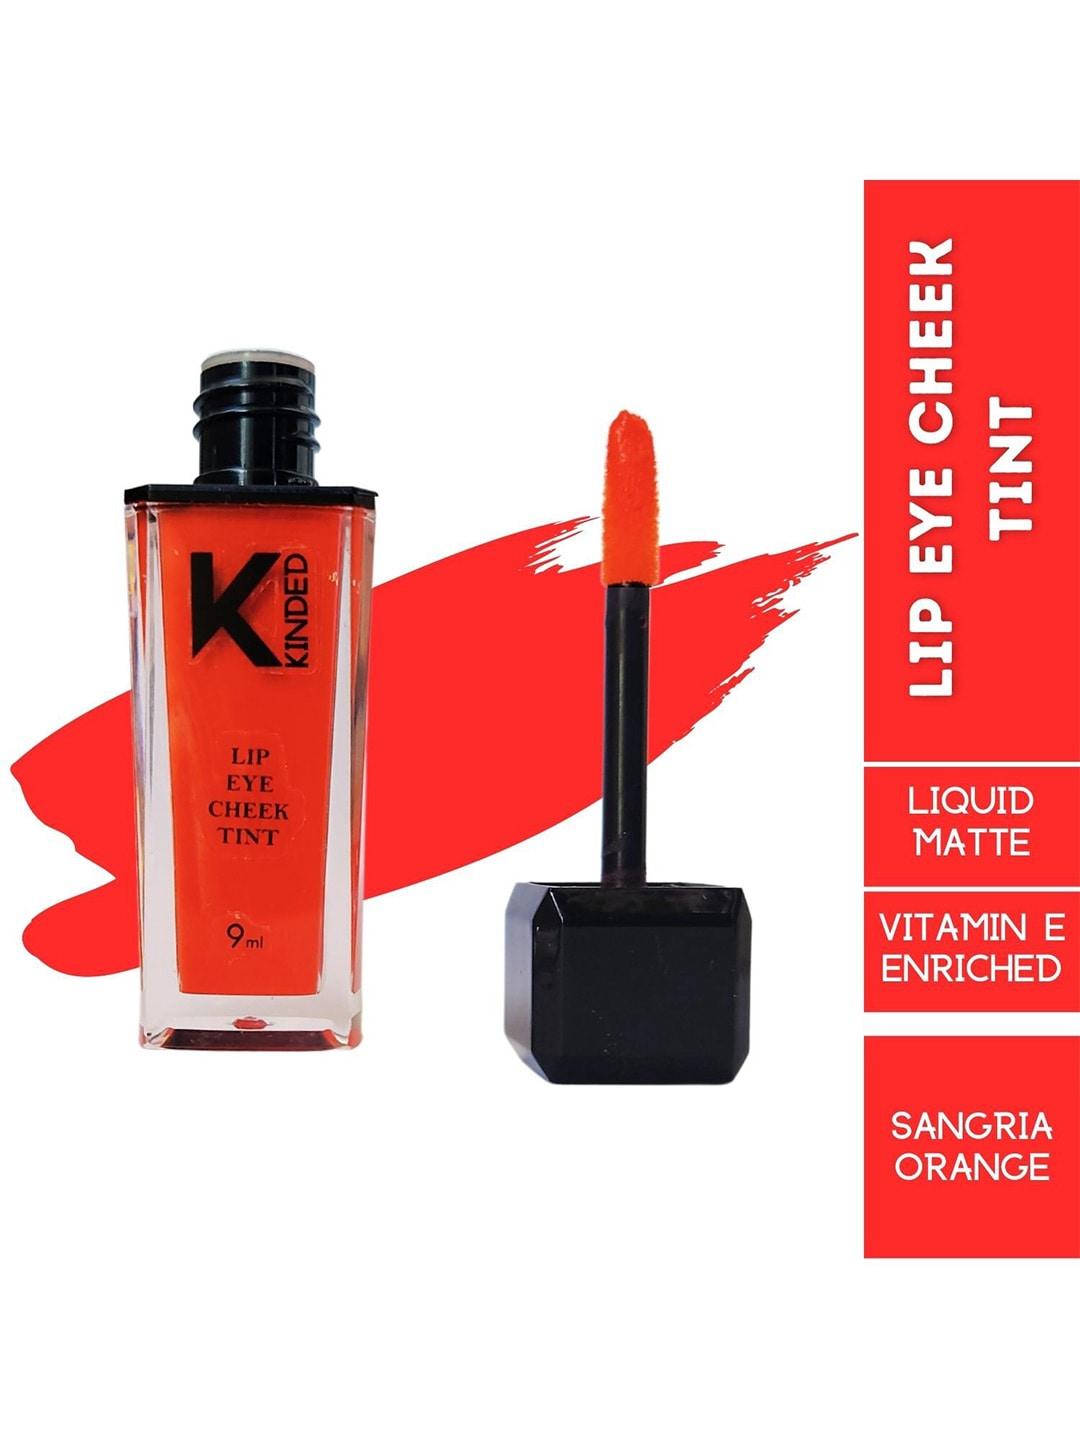 kinded liquid matte 3-in-1 lip eye cheek tint with vitamin e 9 ml - sangria orange 08